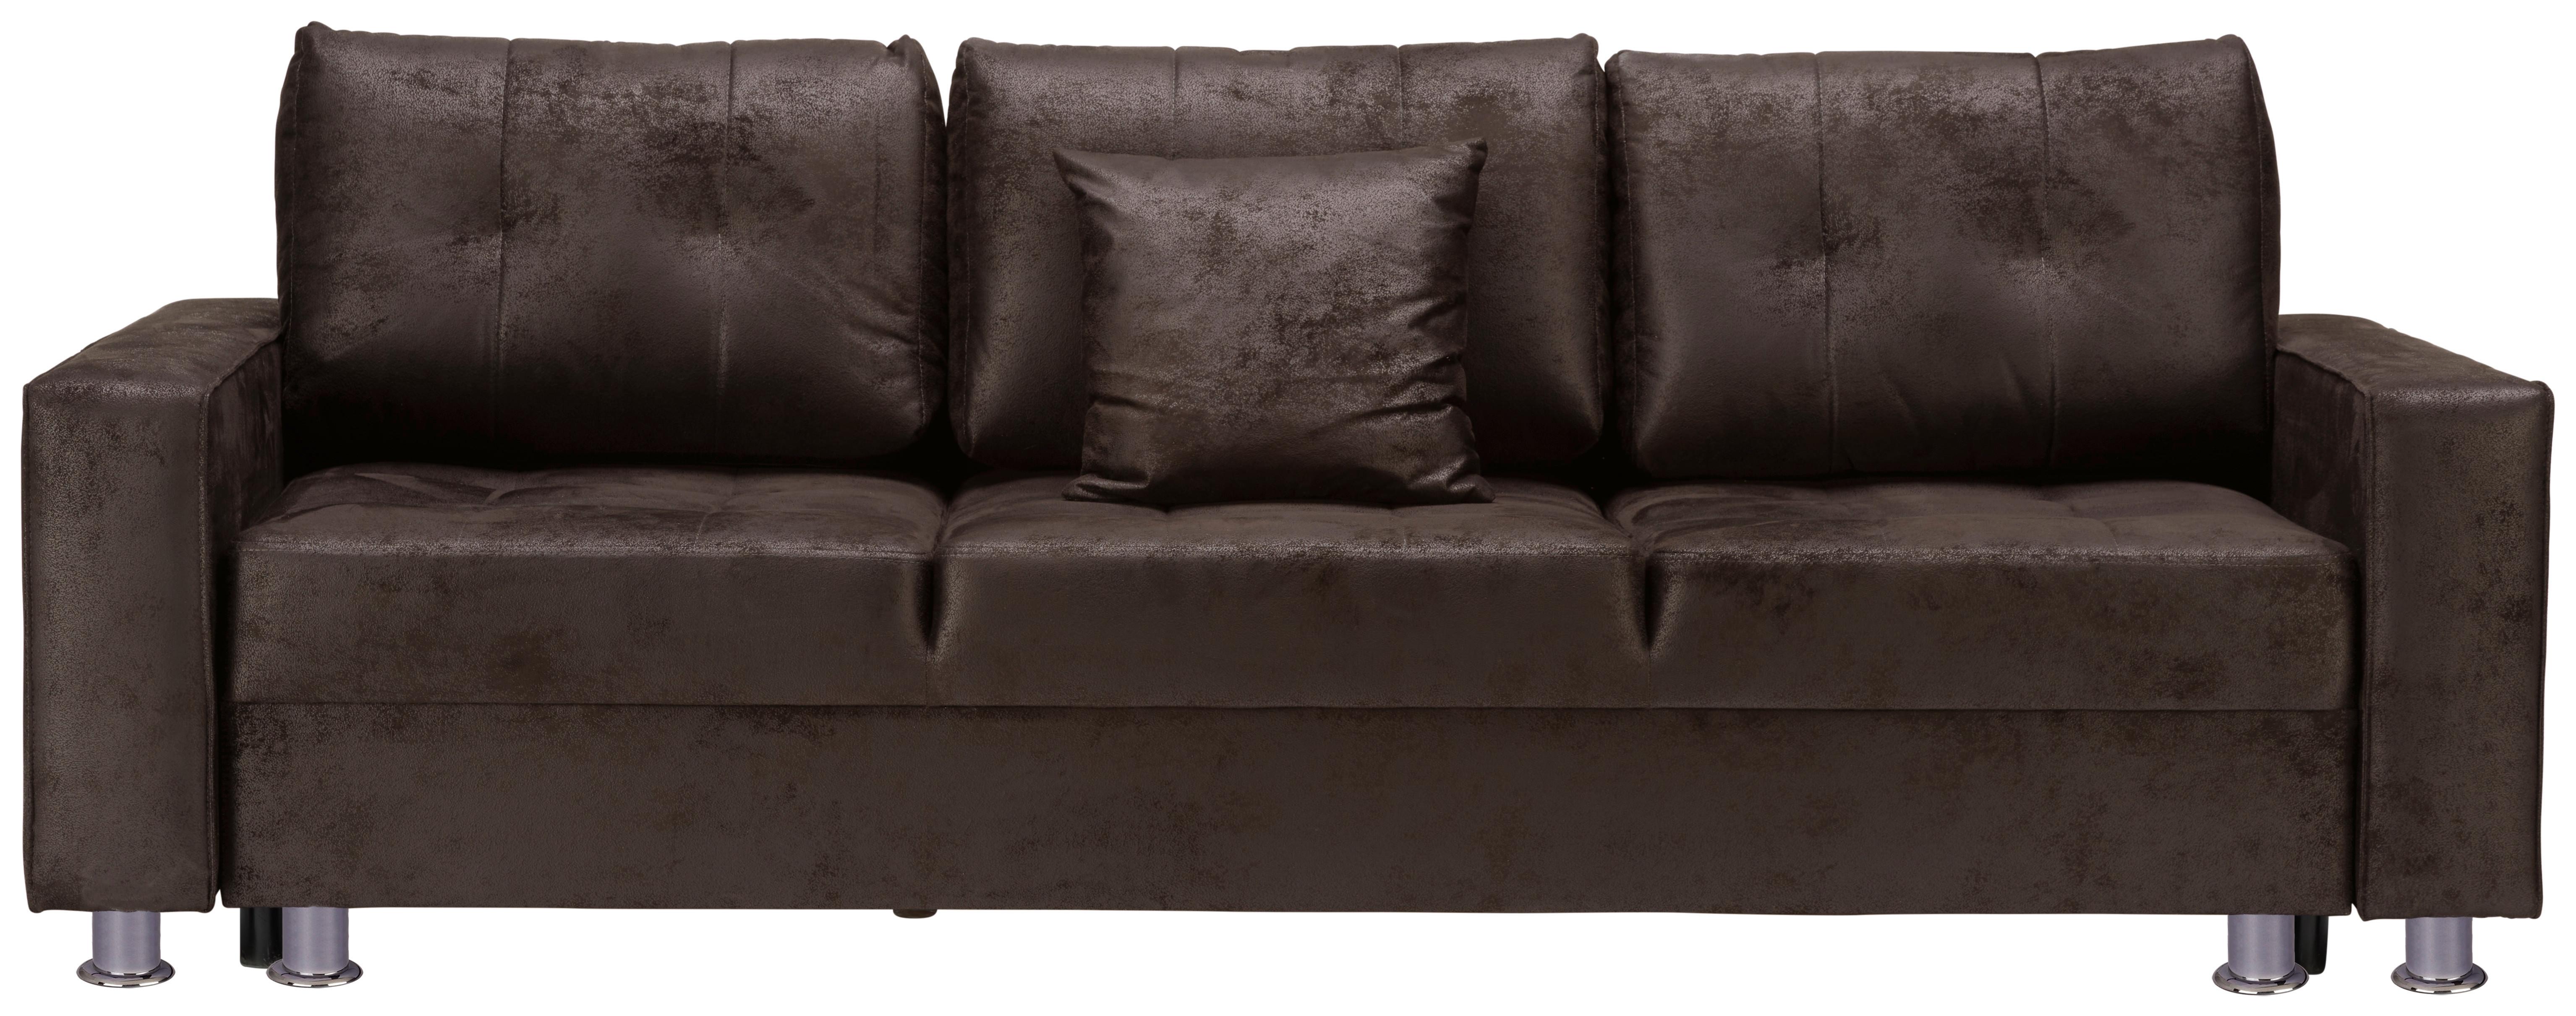 3-Sitzer-Sofa mit Schlaffunkt. Francesco Dunkelbraun - Chromfarben/Dunkelbraun, MODERN, Textil (236/86/98cm) - Livetastic